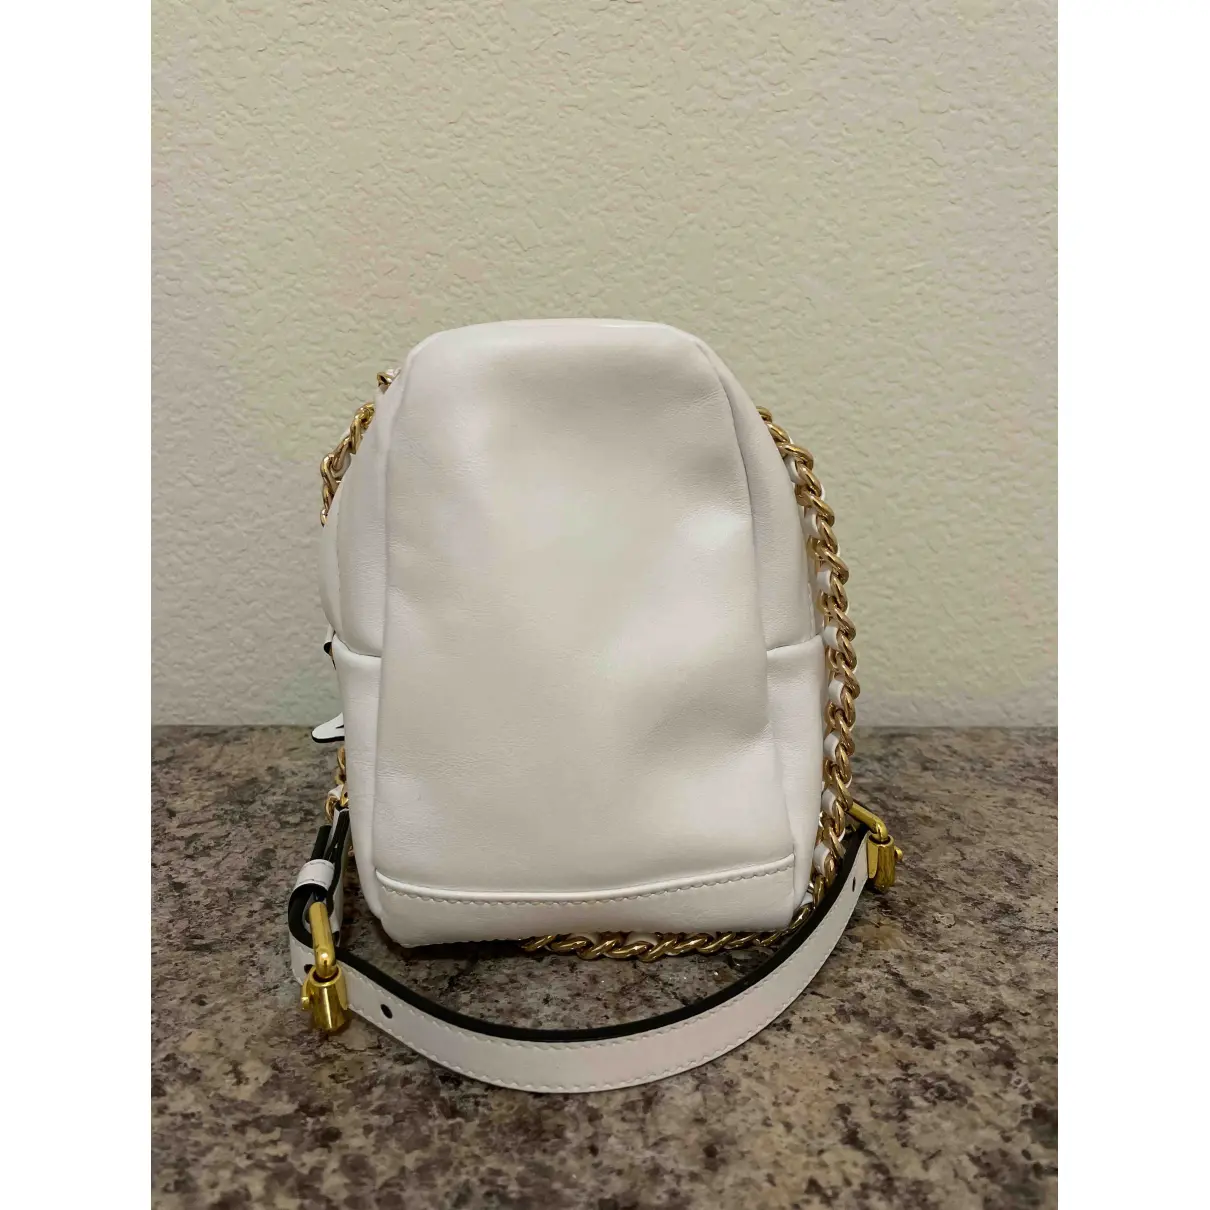 Buy Moschino Leather mini bag online